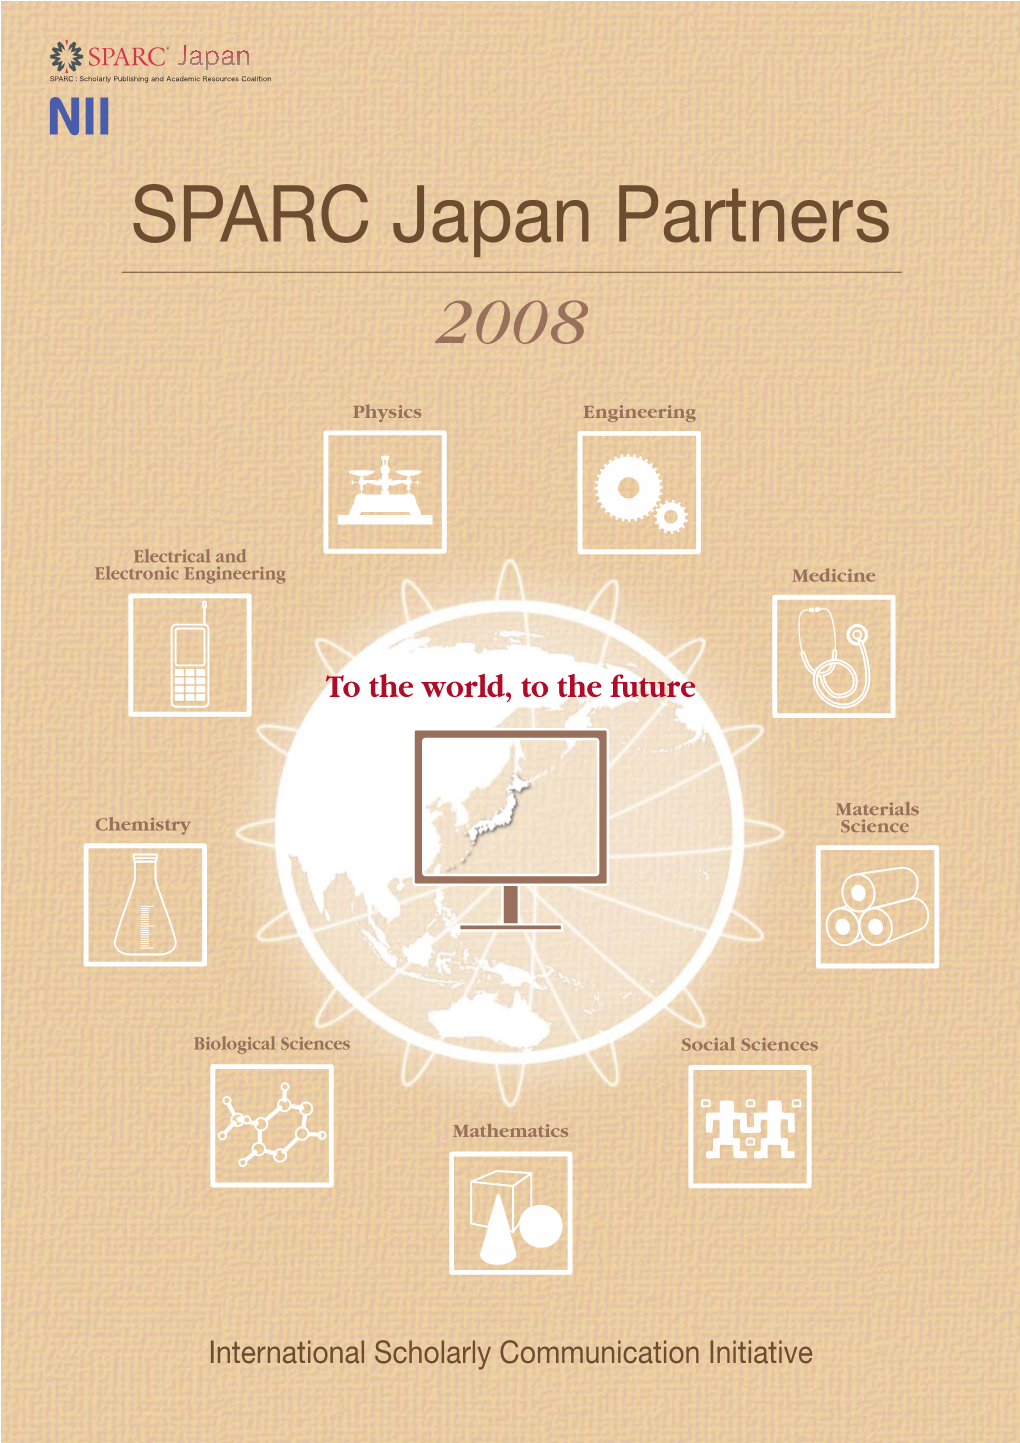 SPARC Japan Partners 2008 (Engilsh Version)